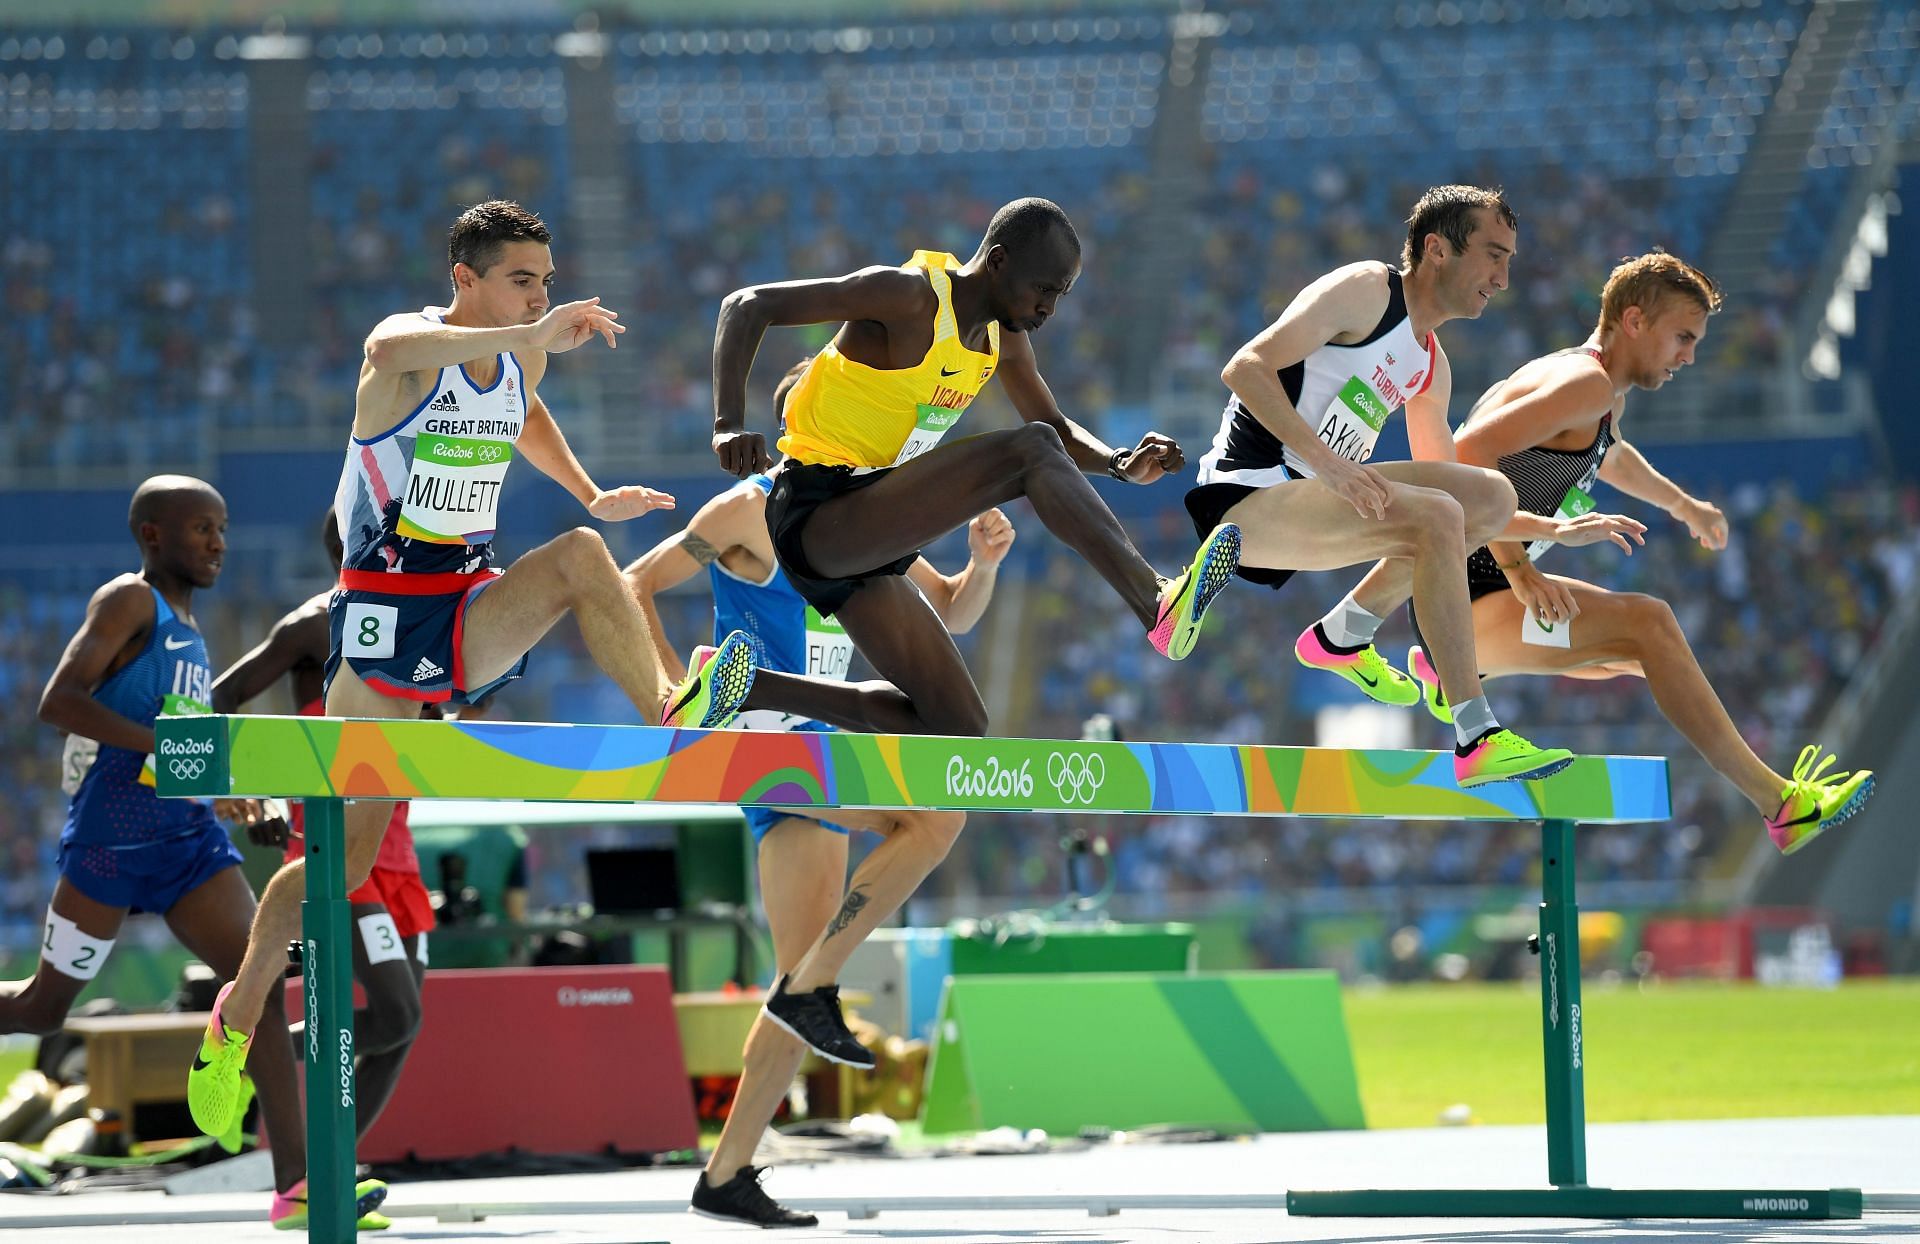 Benjamin Kiplagat in action at the Rio Olympics 2016